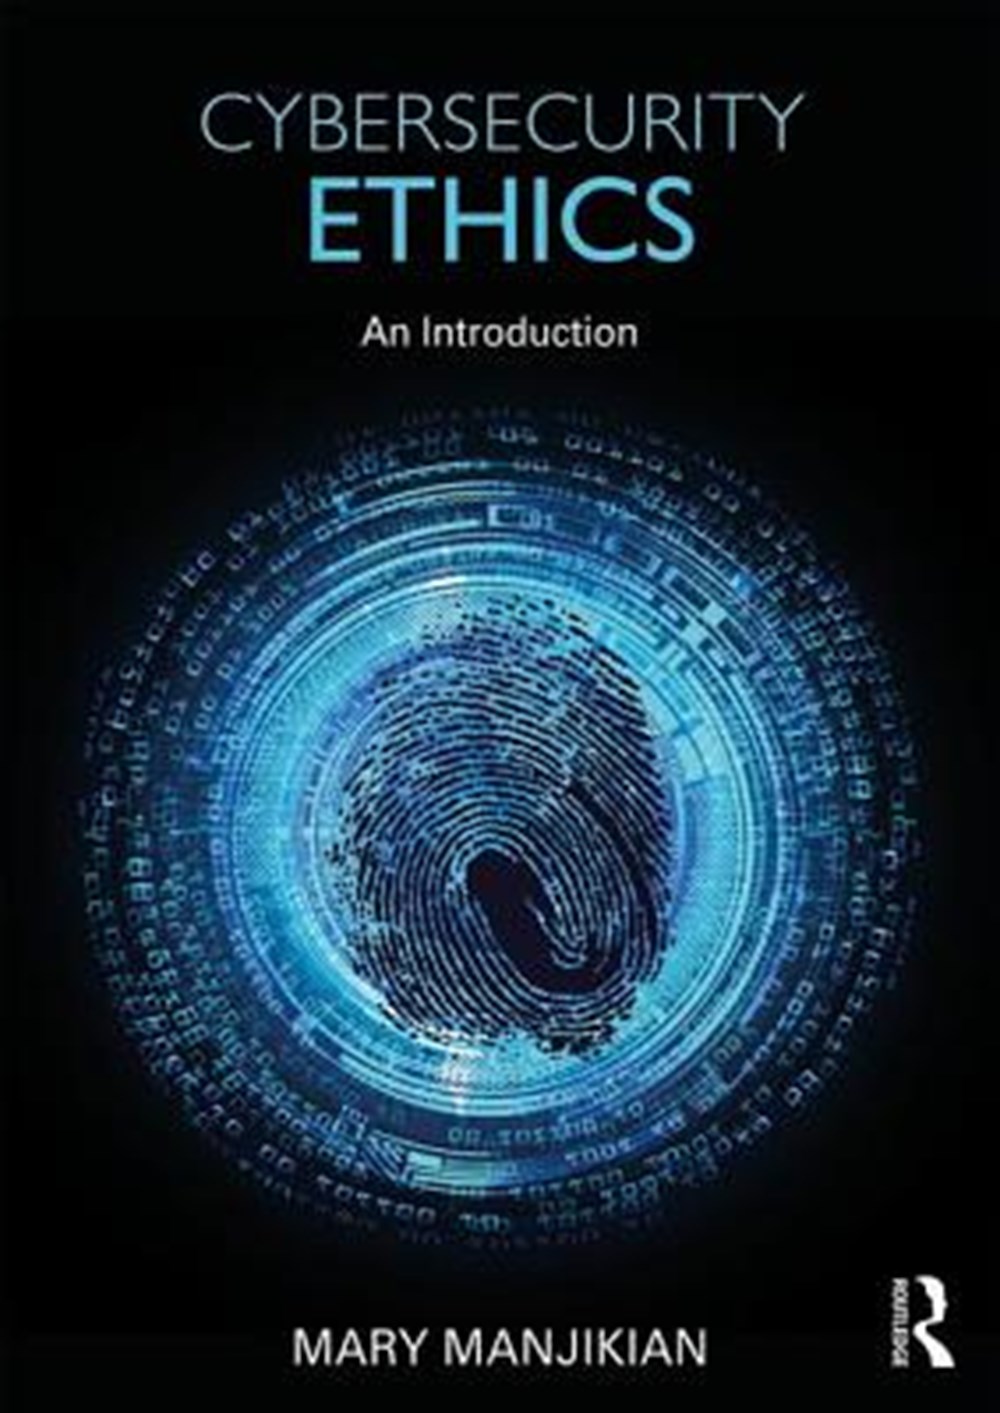 cyber ethics essay in english